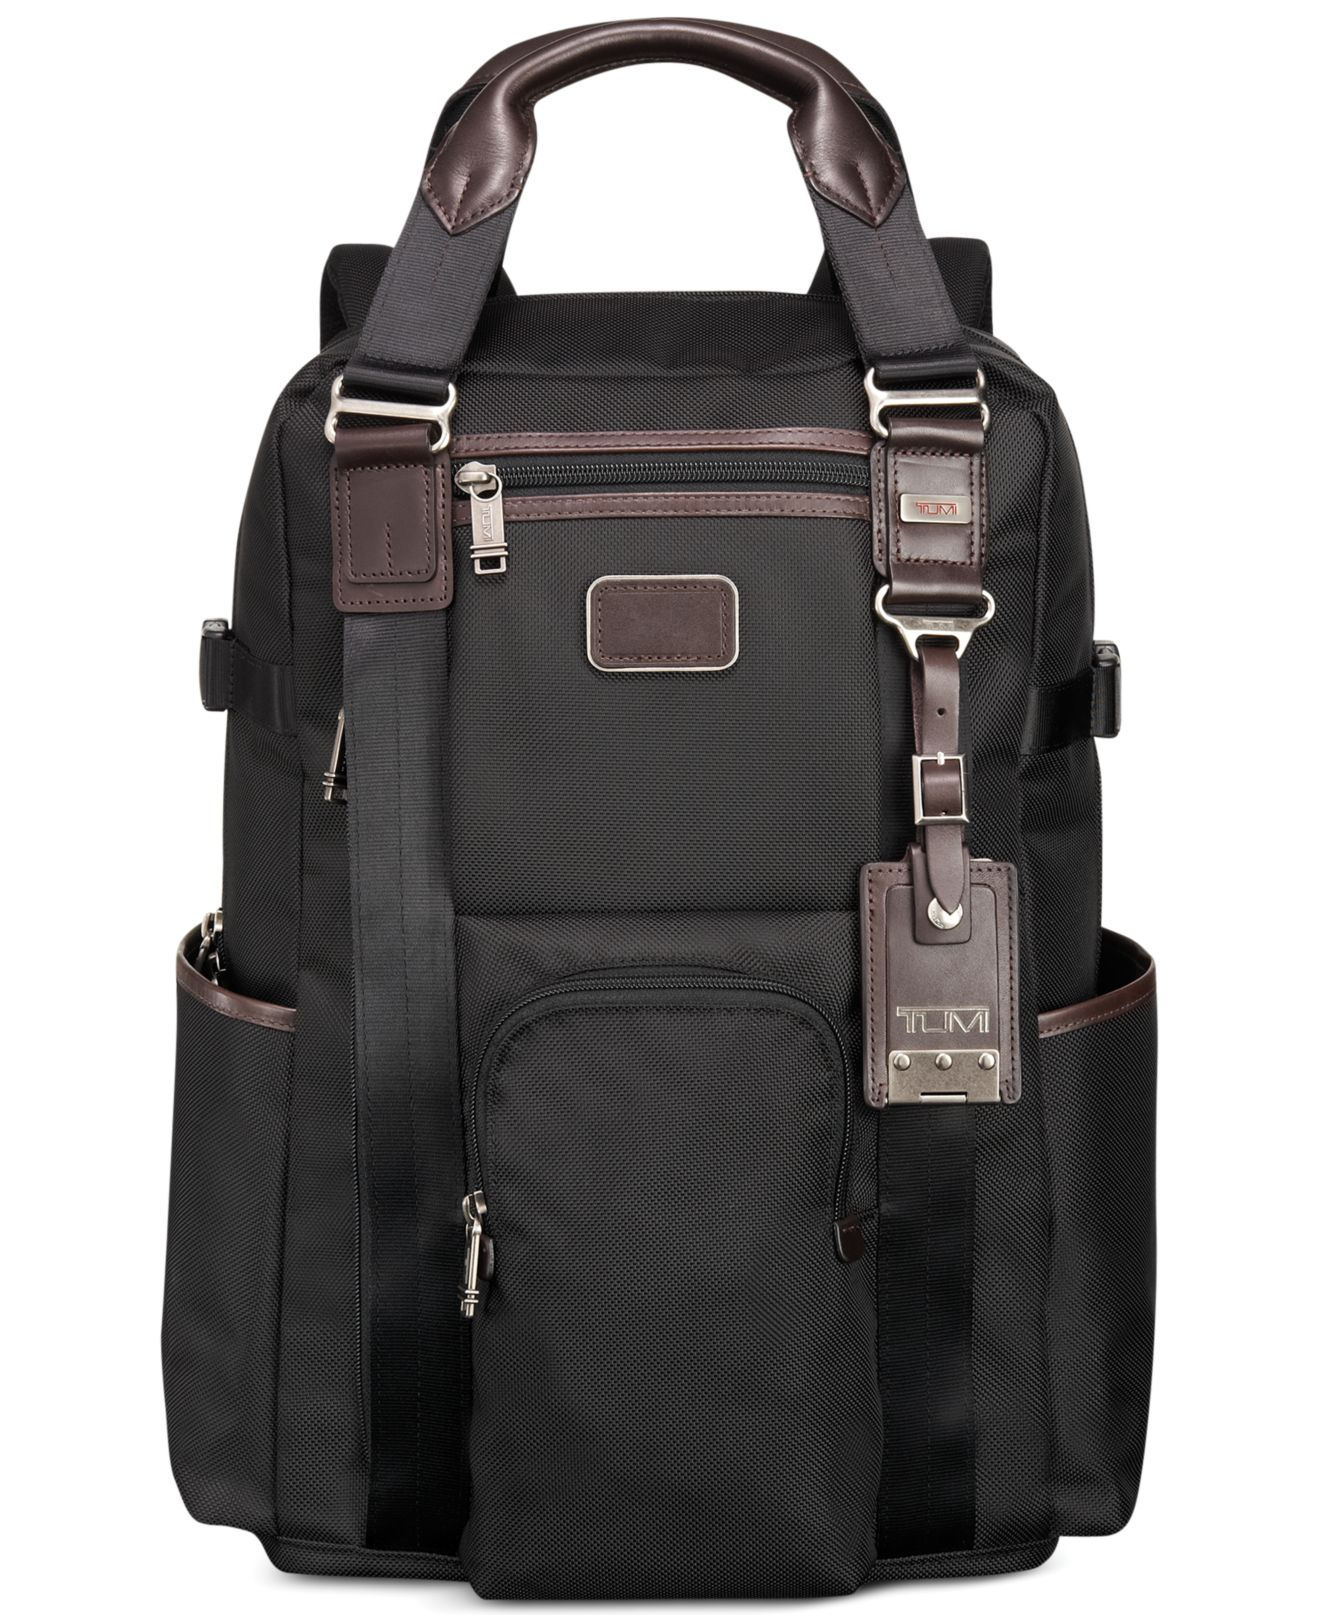 Lyst - Tumi Alpha Bravo Lejeune Backpack Tote in Black for Men